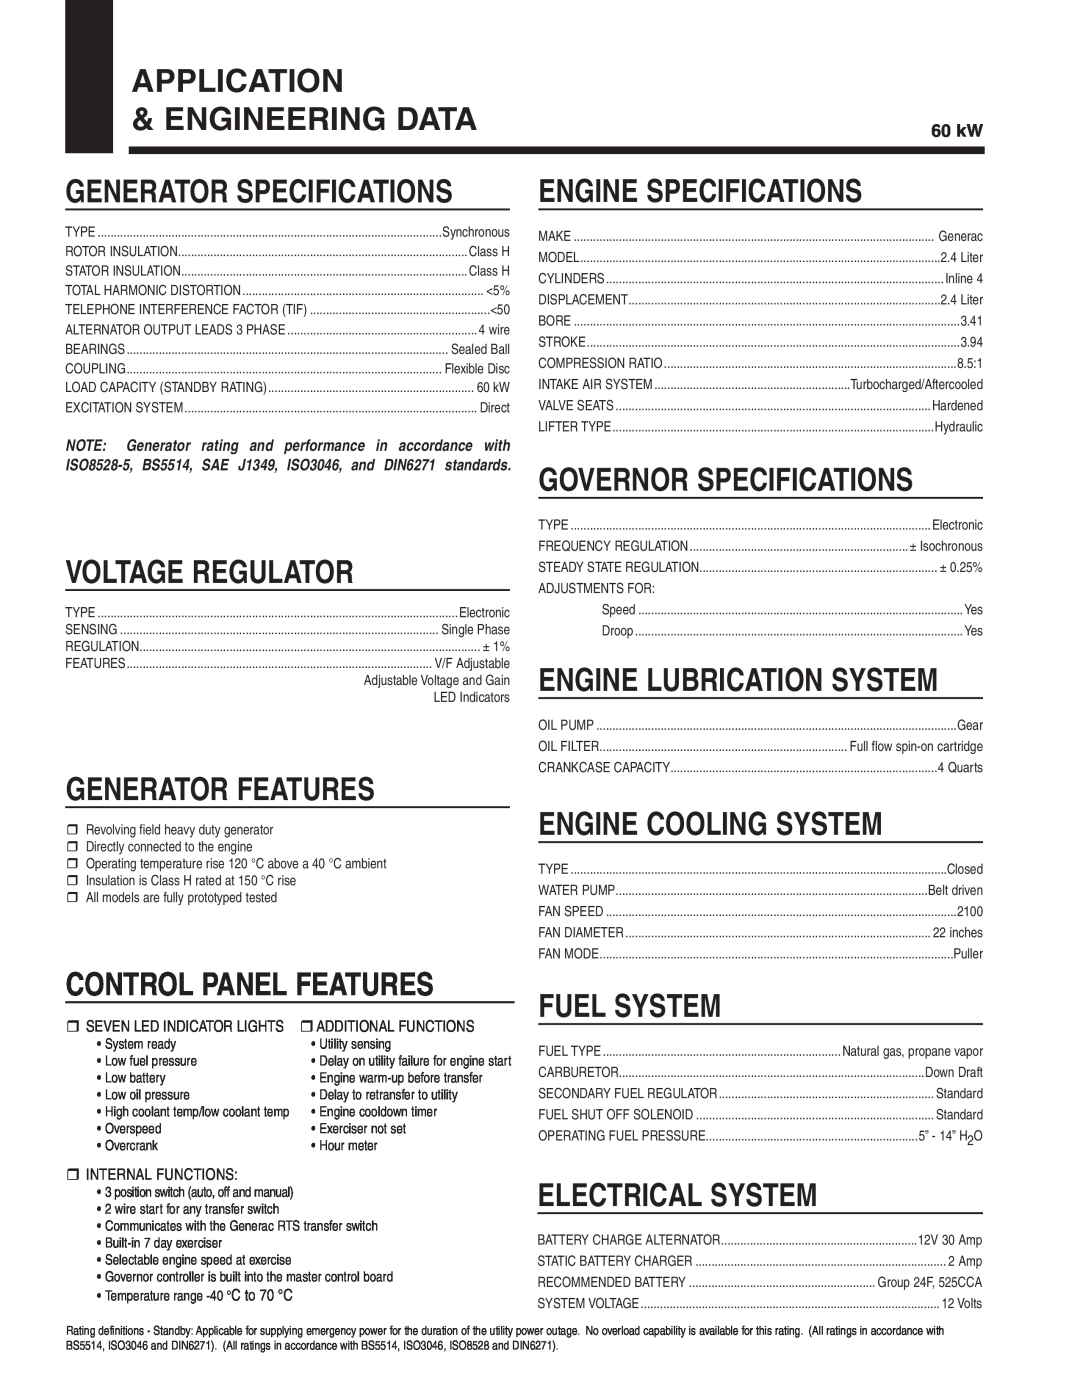 Guardian Technologies 05649 Application & Engineering Data, Engine Specifications, Voltage Regulator, Generator Features 